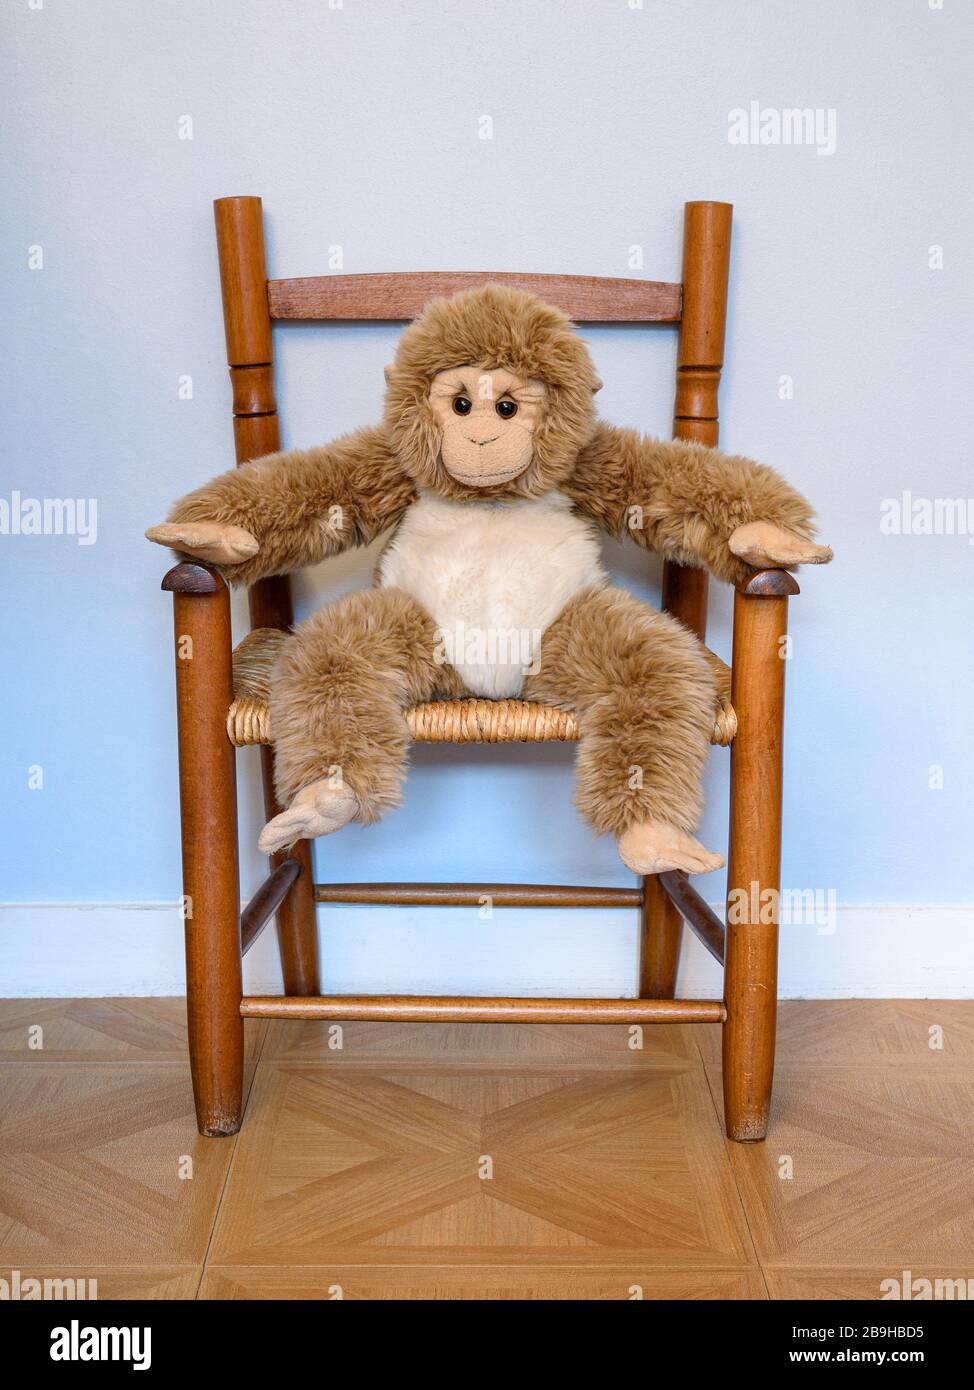 Peluche Mono Peluche Juguete Sentado Pacientemente Imagen de archivo -  Imagen de animal, mascota: 207836563